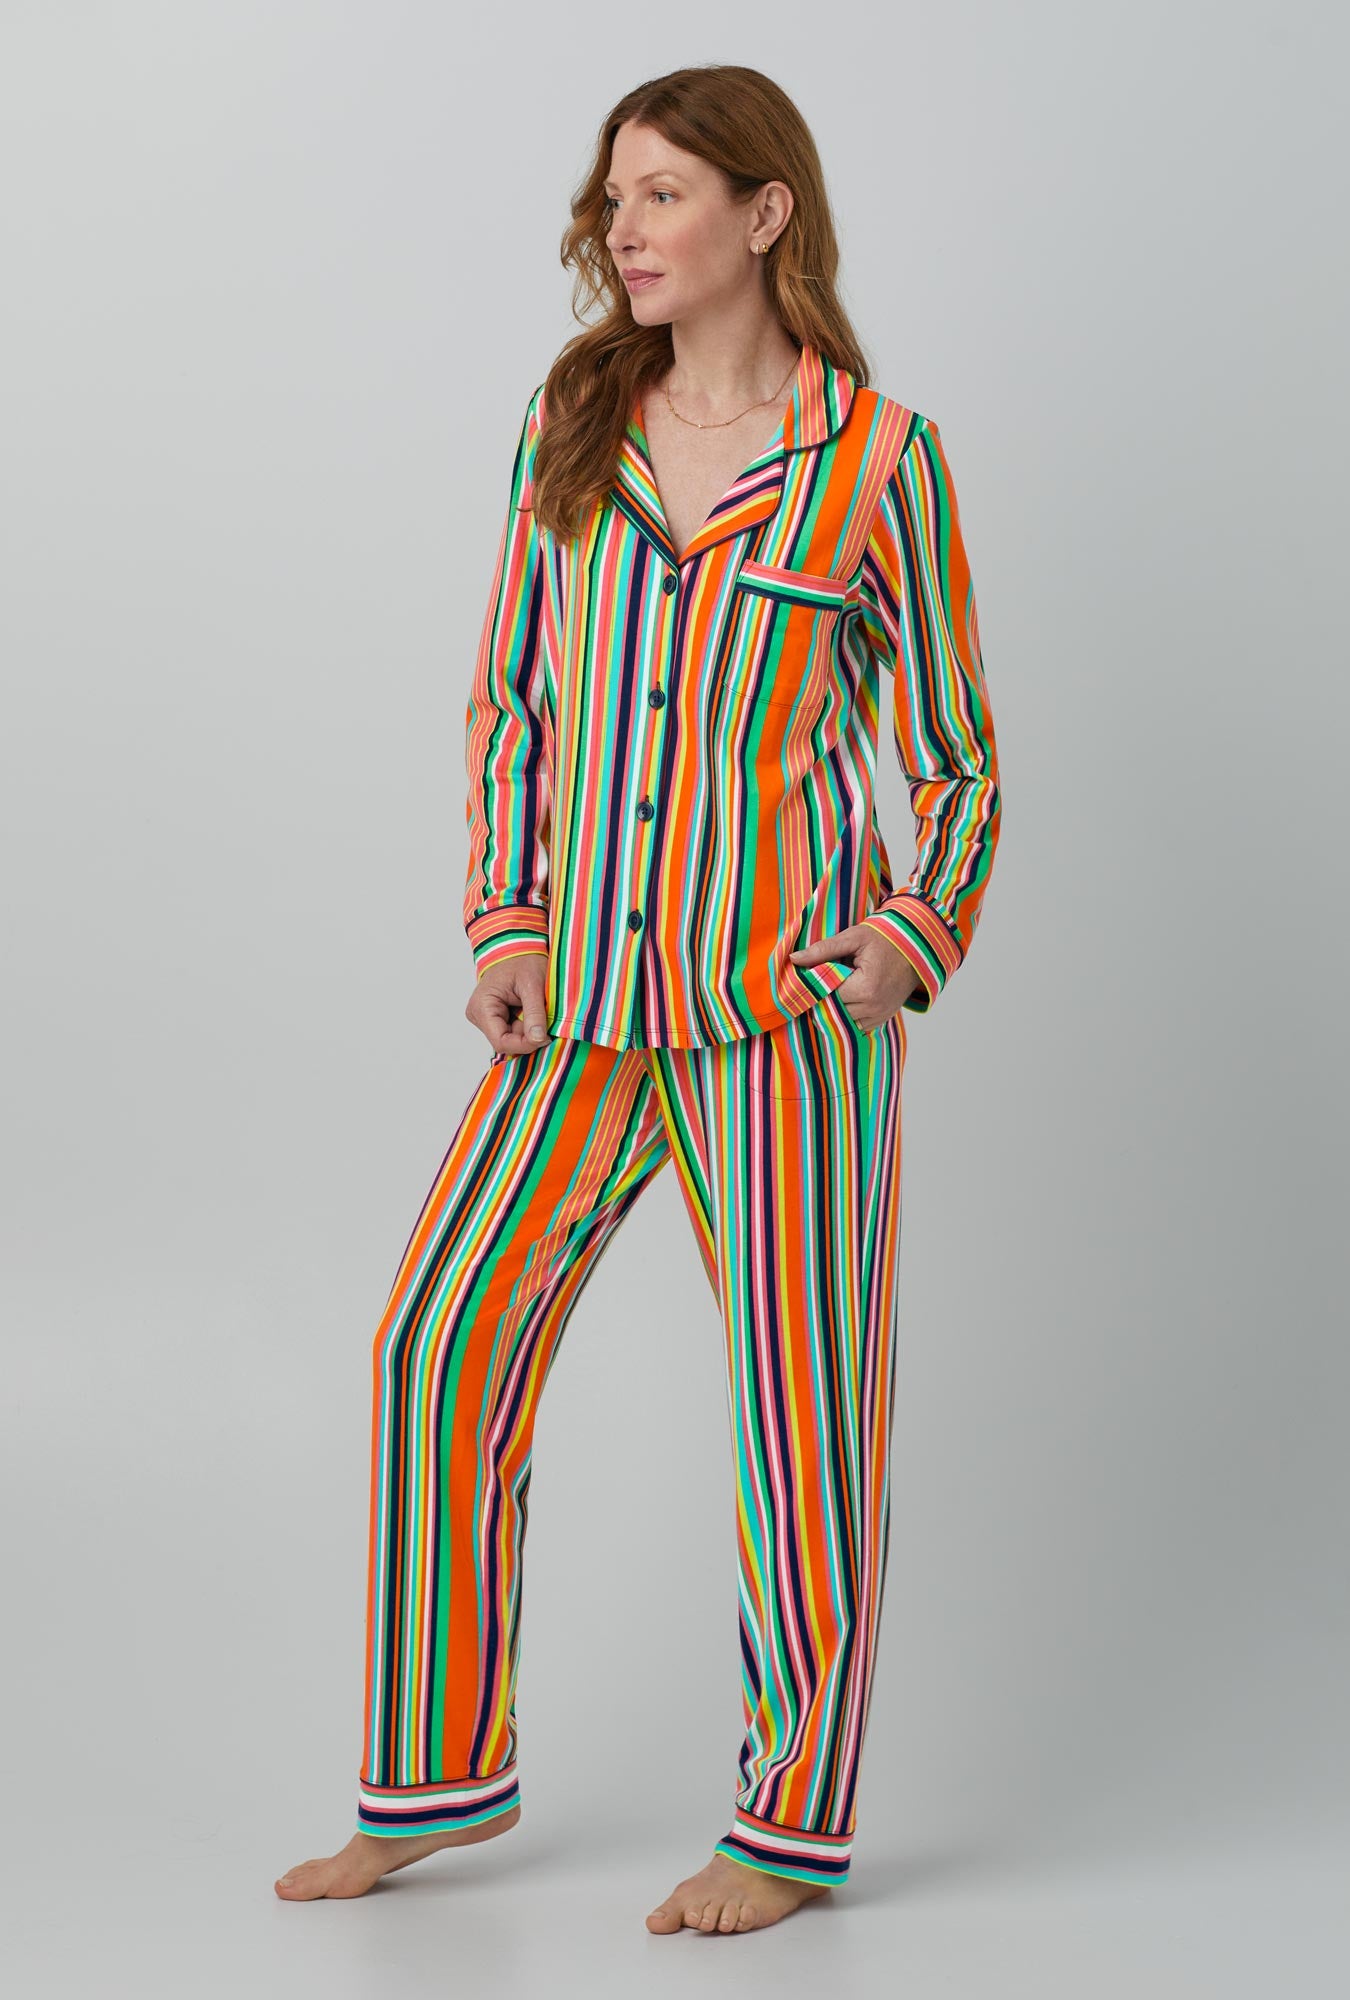 A lady wearing Stripe Long Sleeve Classic Stretch Jersey PJ Set